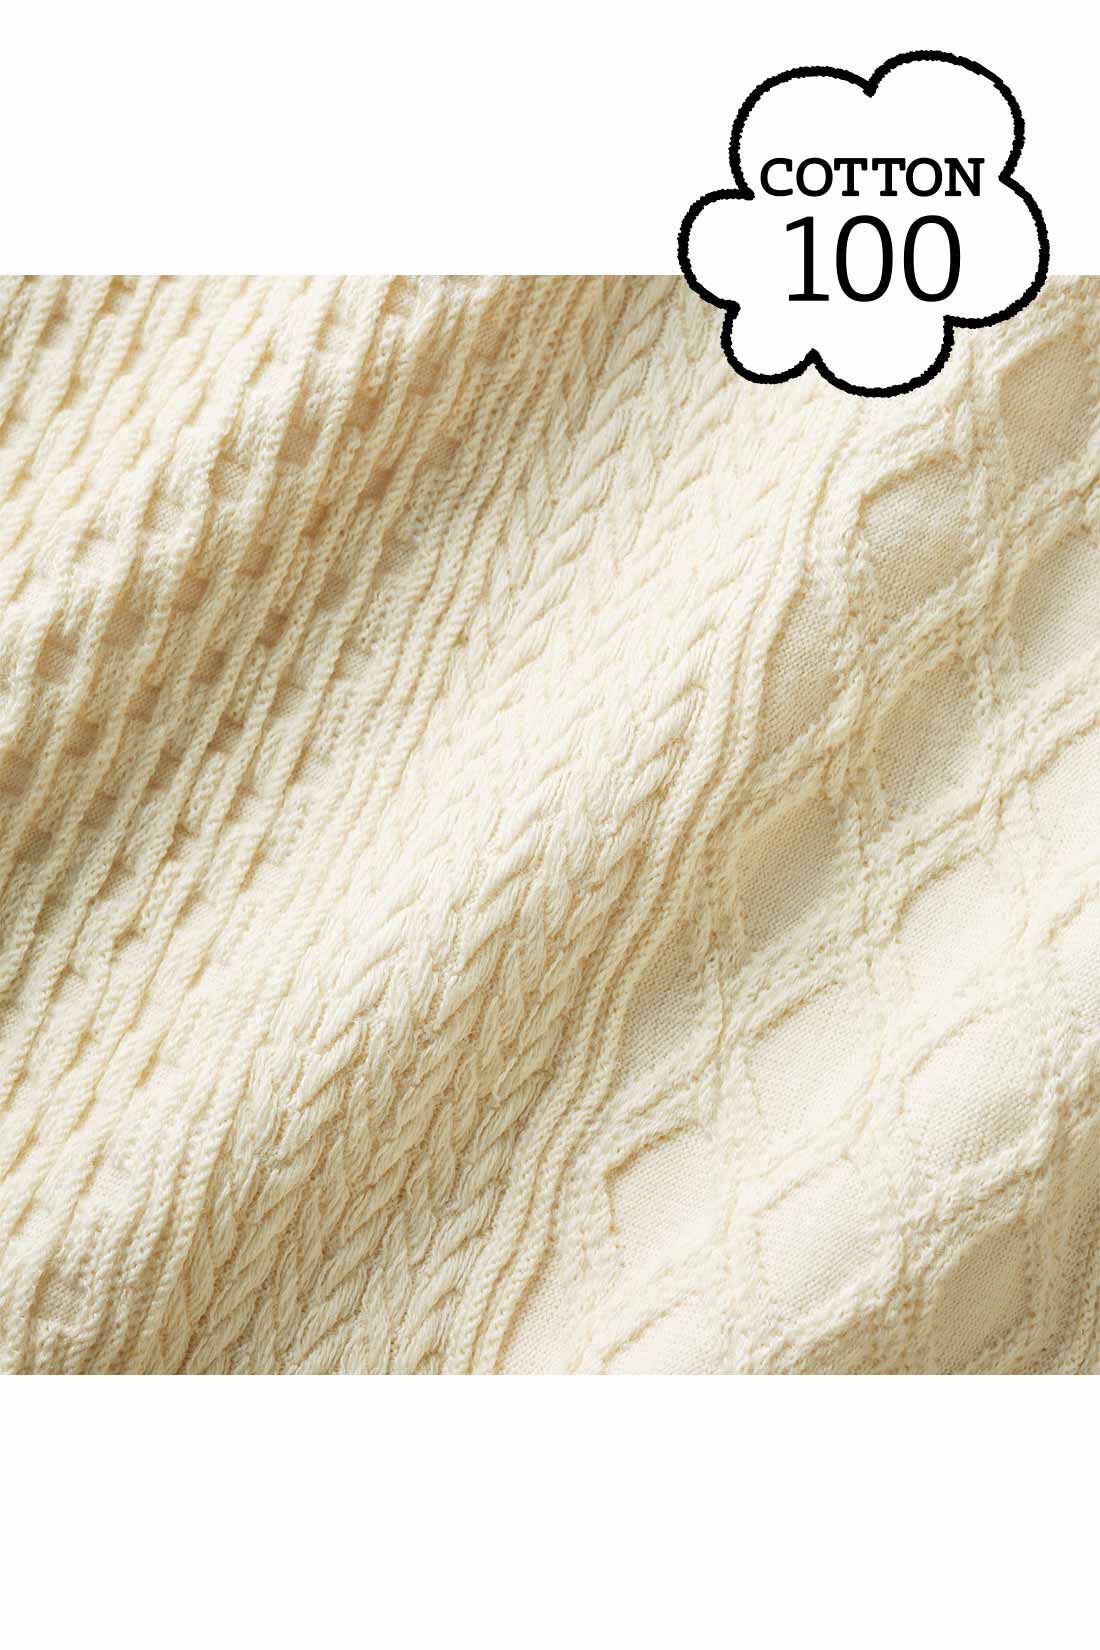 Live in  comfort|Live love cottonプロジェクト　リブ イン コンフォート　柄編みが素敵な厚手オーガニックコットントップス〈グリーン〉|まるでニットのようなジャカード編みのカットソー素材。